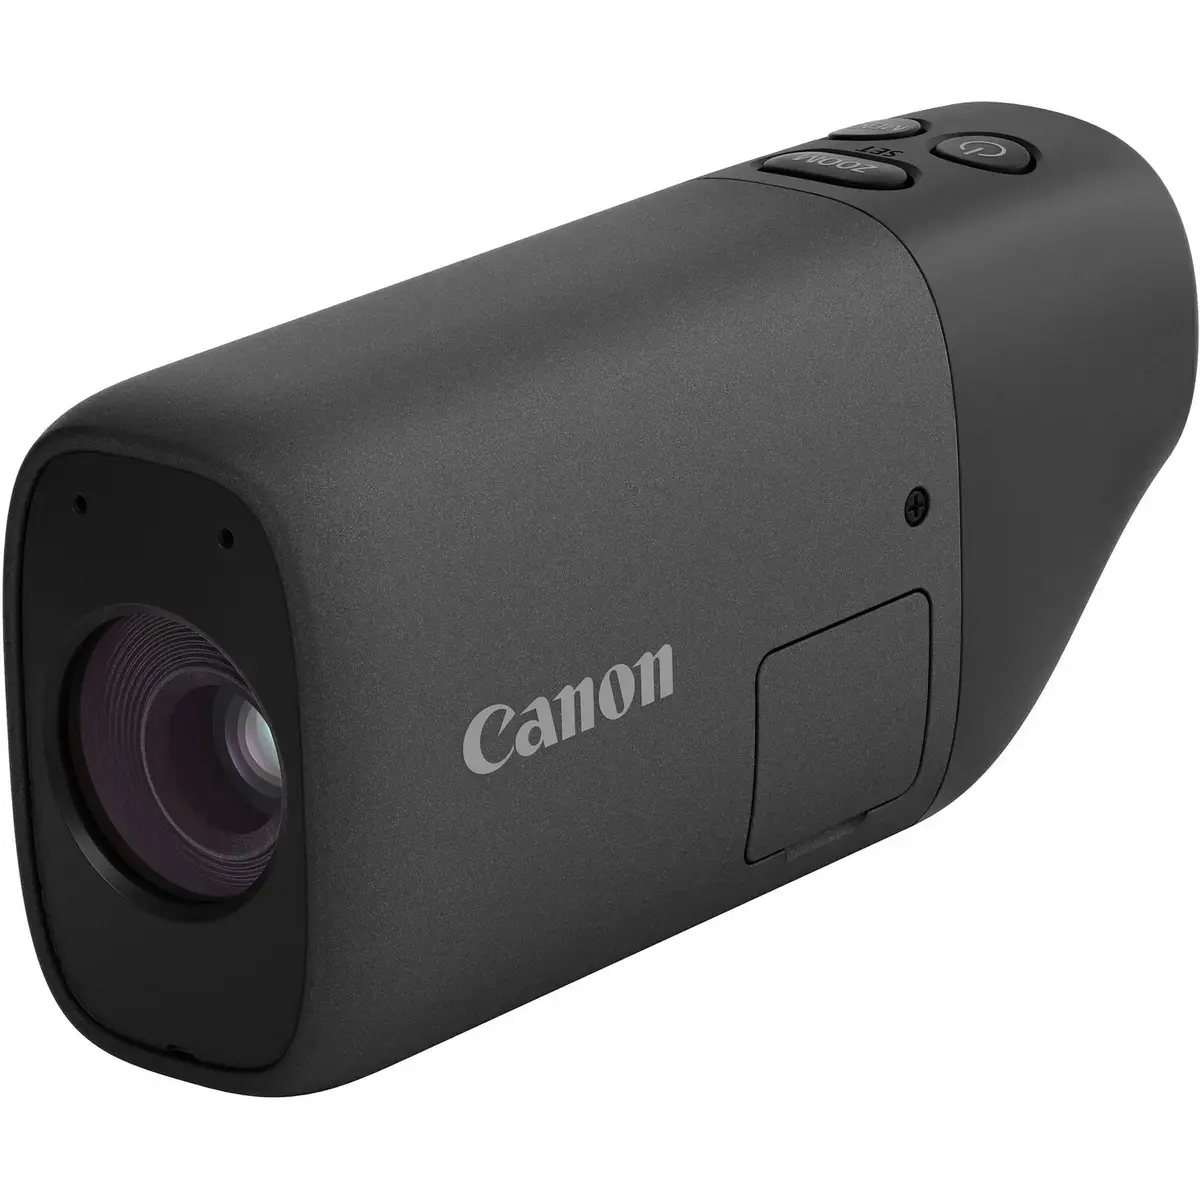 1. Canon PowerShot Zoom Digital Camera (Black)